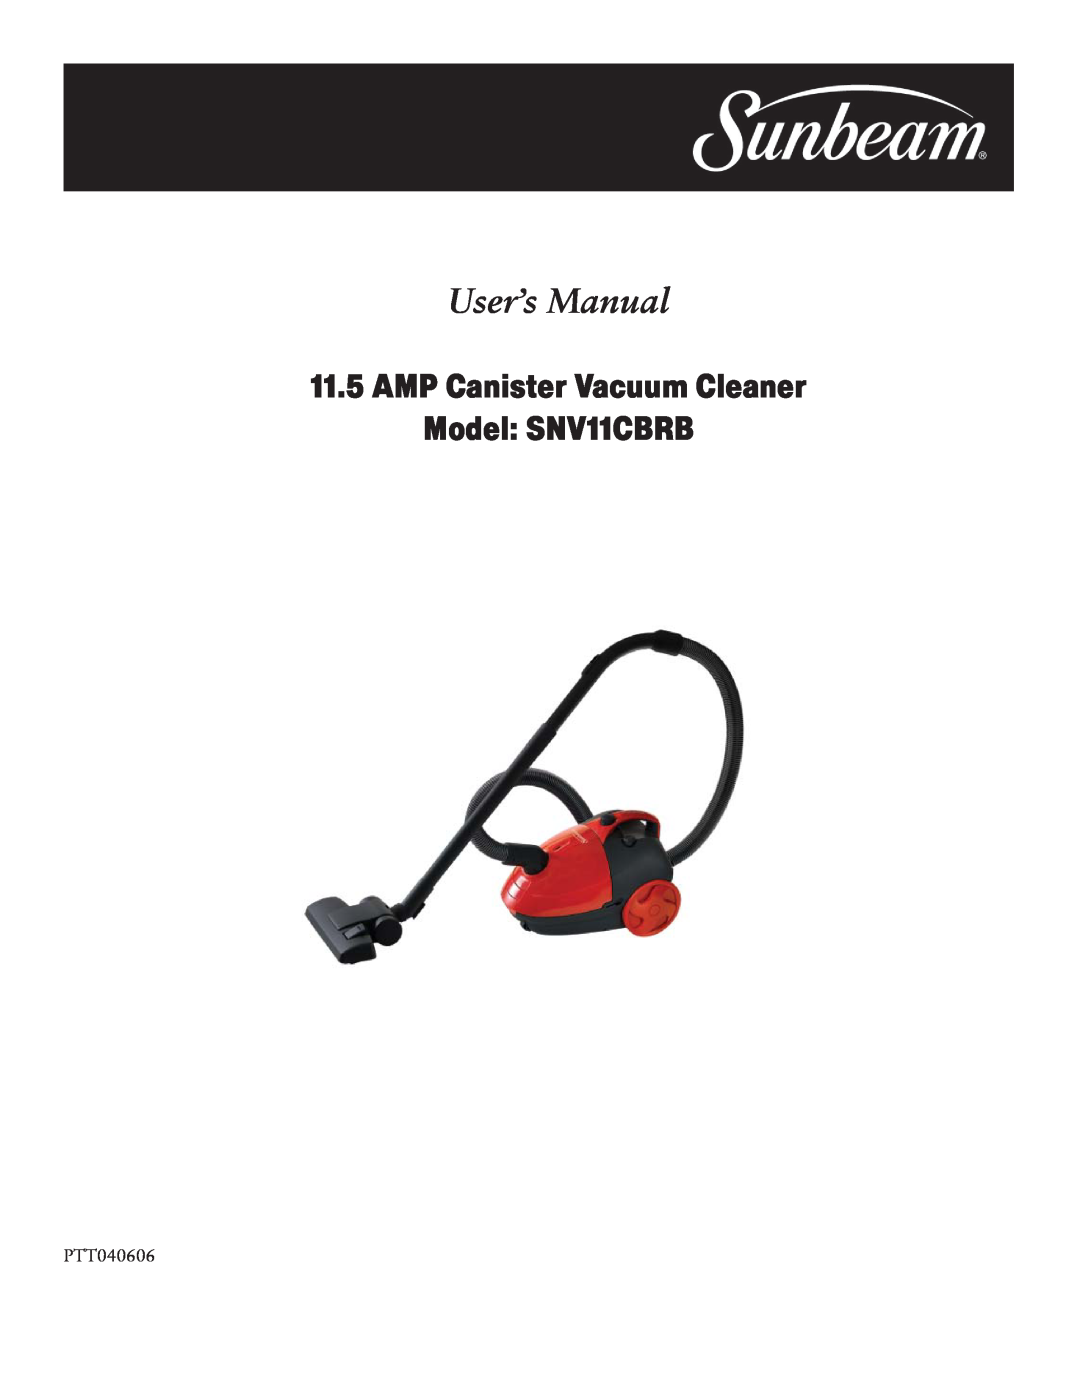 Sunbeam user manual 11.5AMP Canister Vacuum Cleaner Model SNV11CBRB, PTT040606 